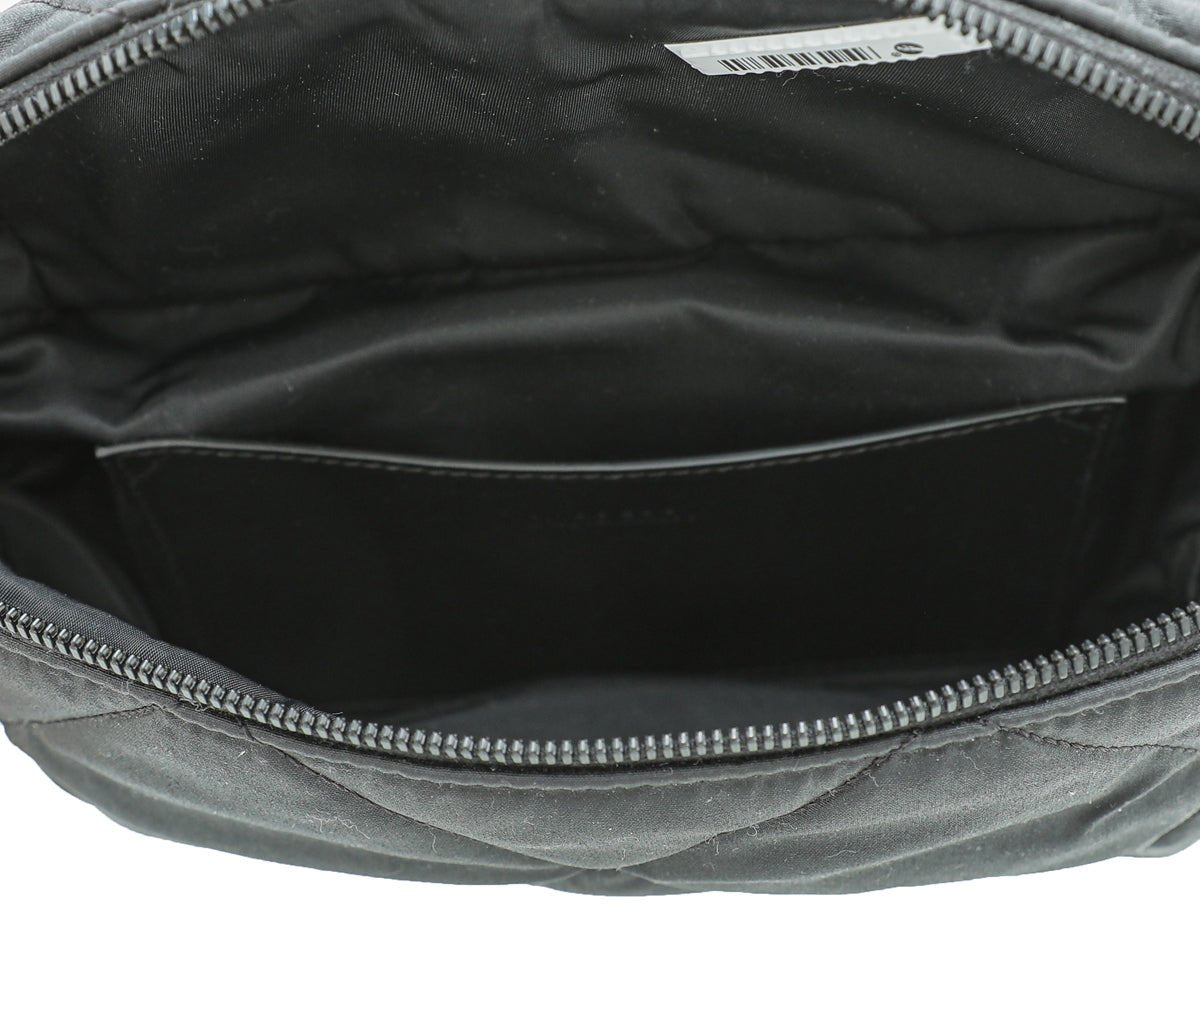 Burberry - Burberry Black Sonny Diamond Quilted Belt Bag | The Closet